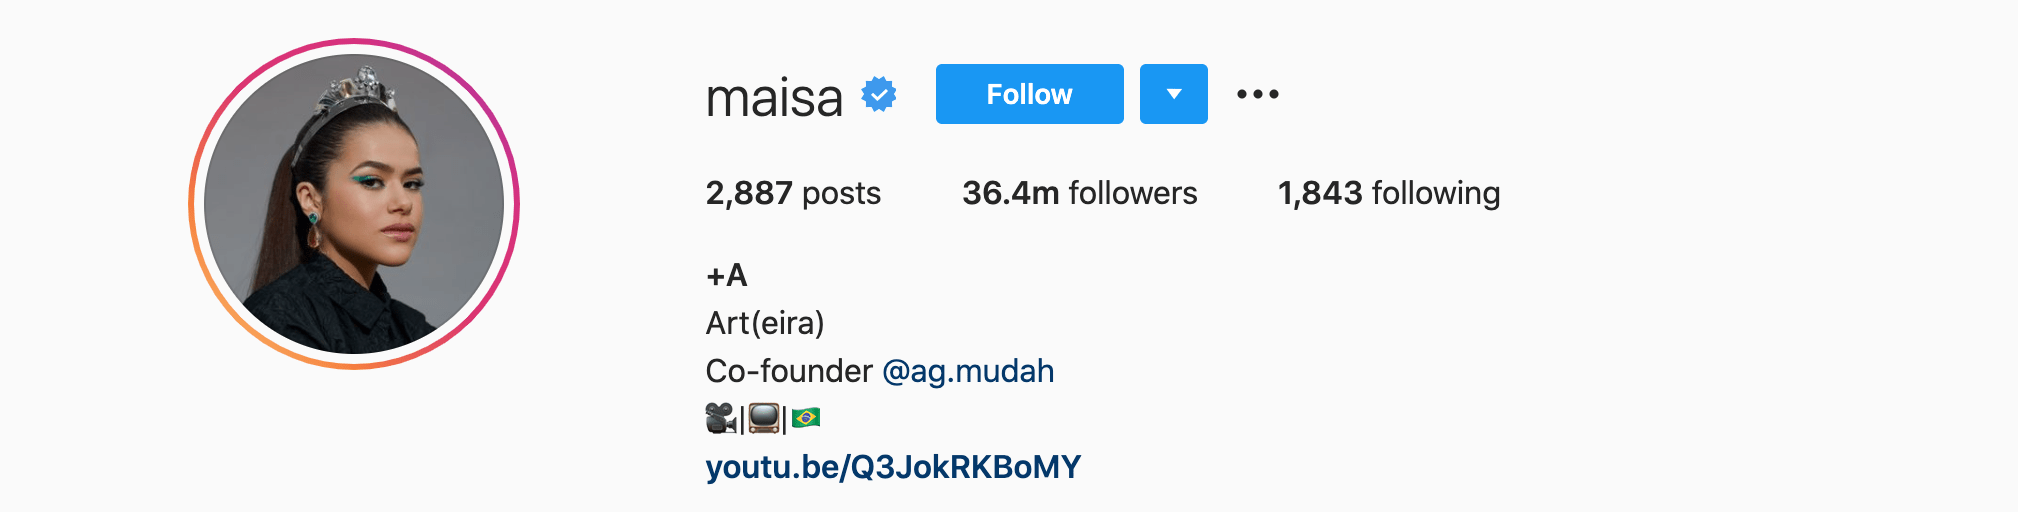 Top Instagram Influencers - MAISA SILVA